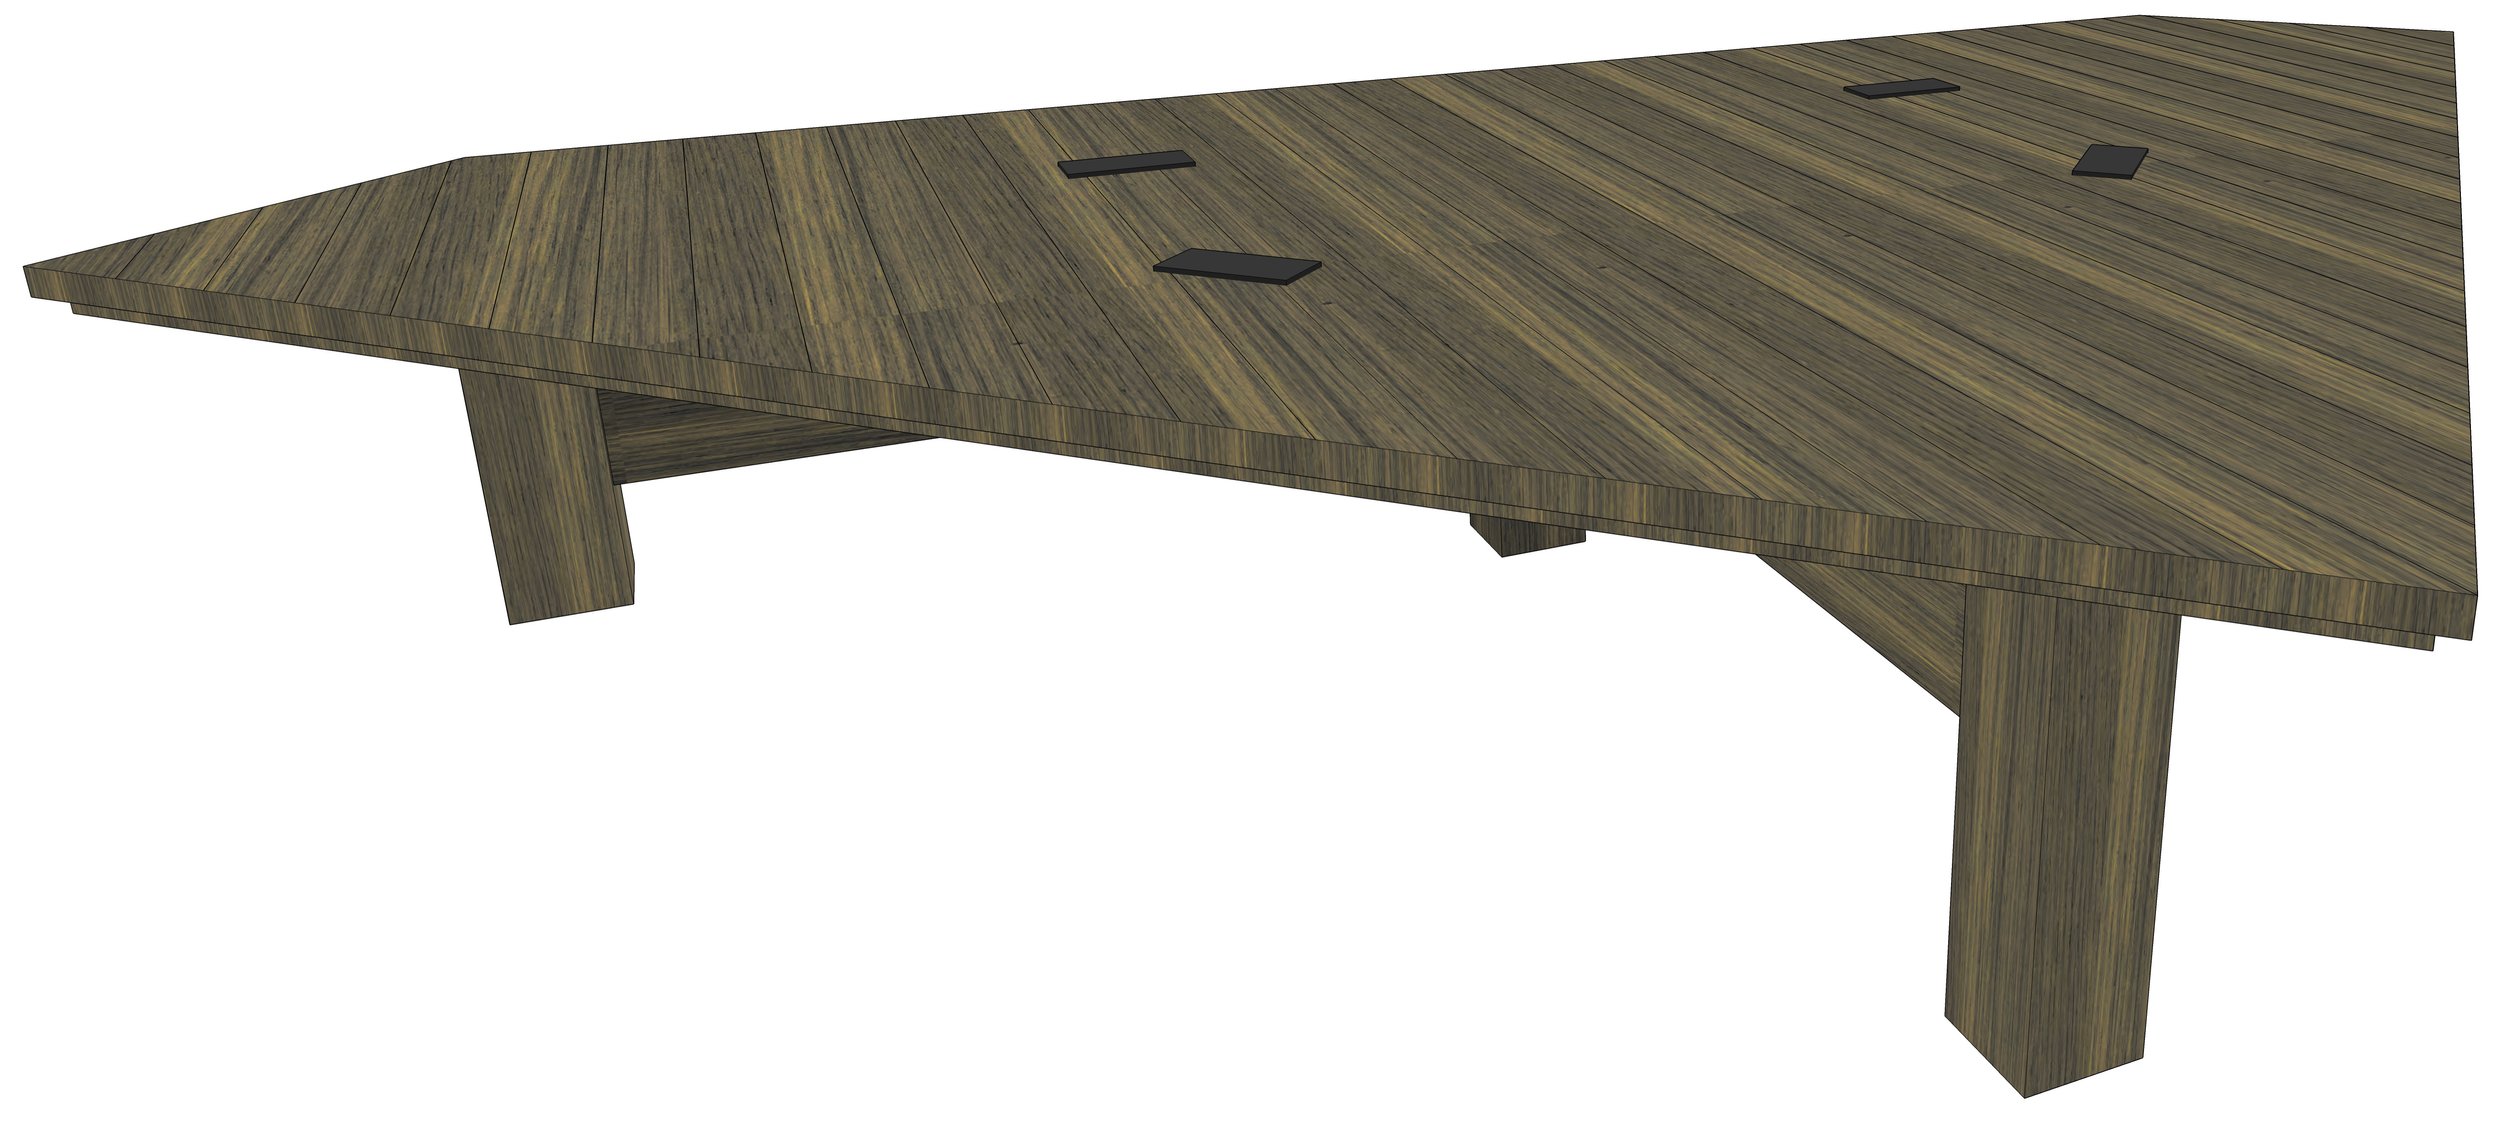 SkB - Product - Furniture - McKinsey Touchdown Tables -4.jpg